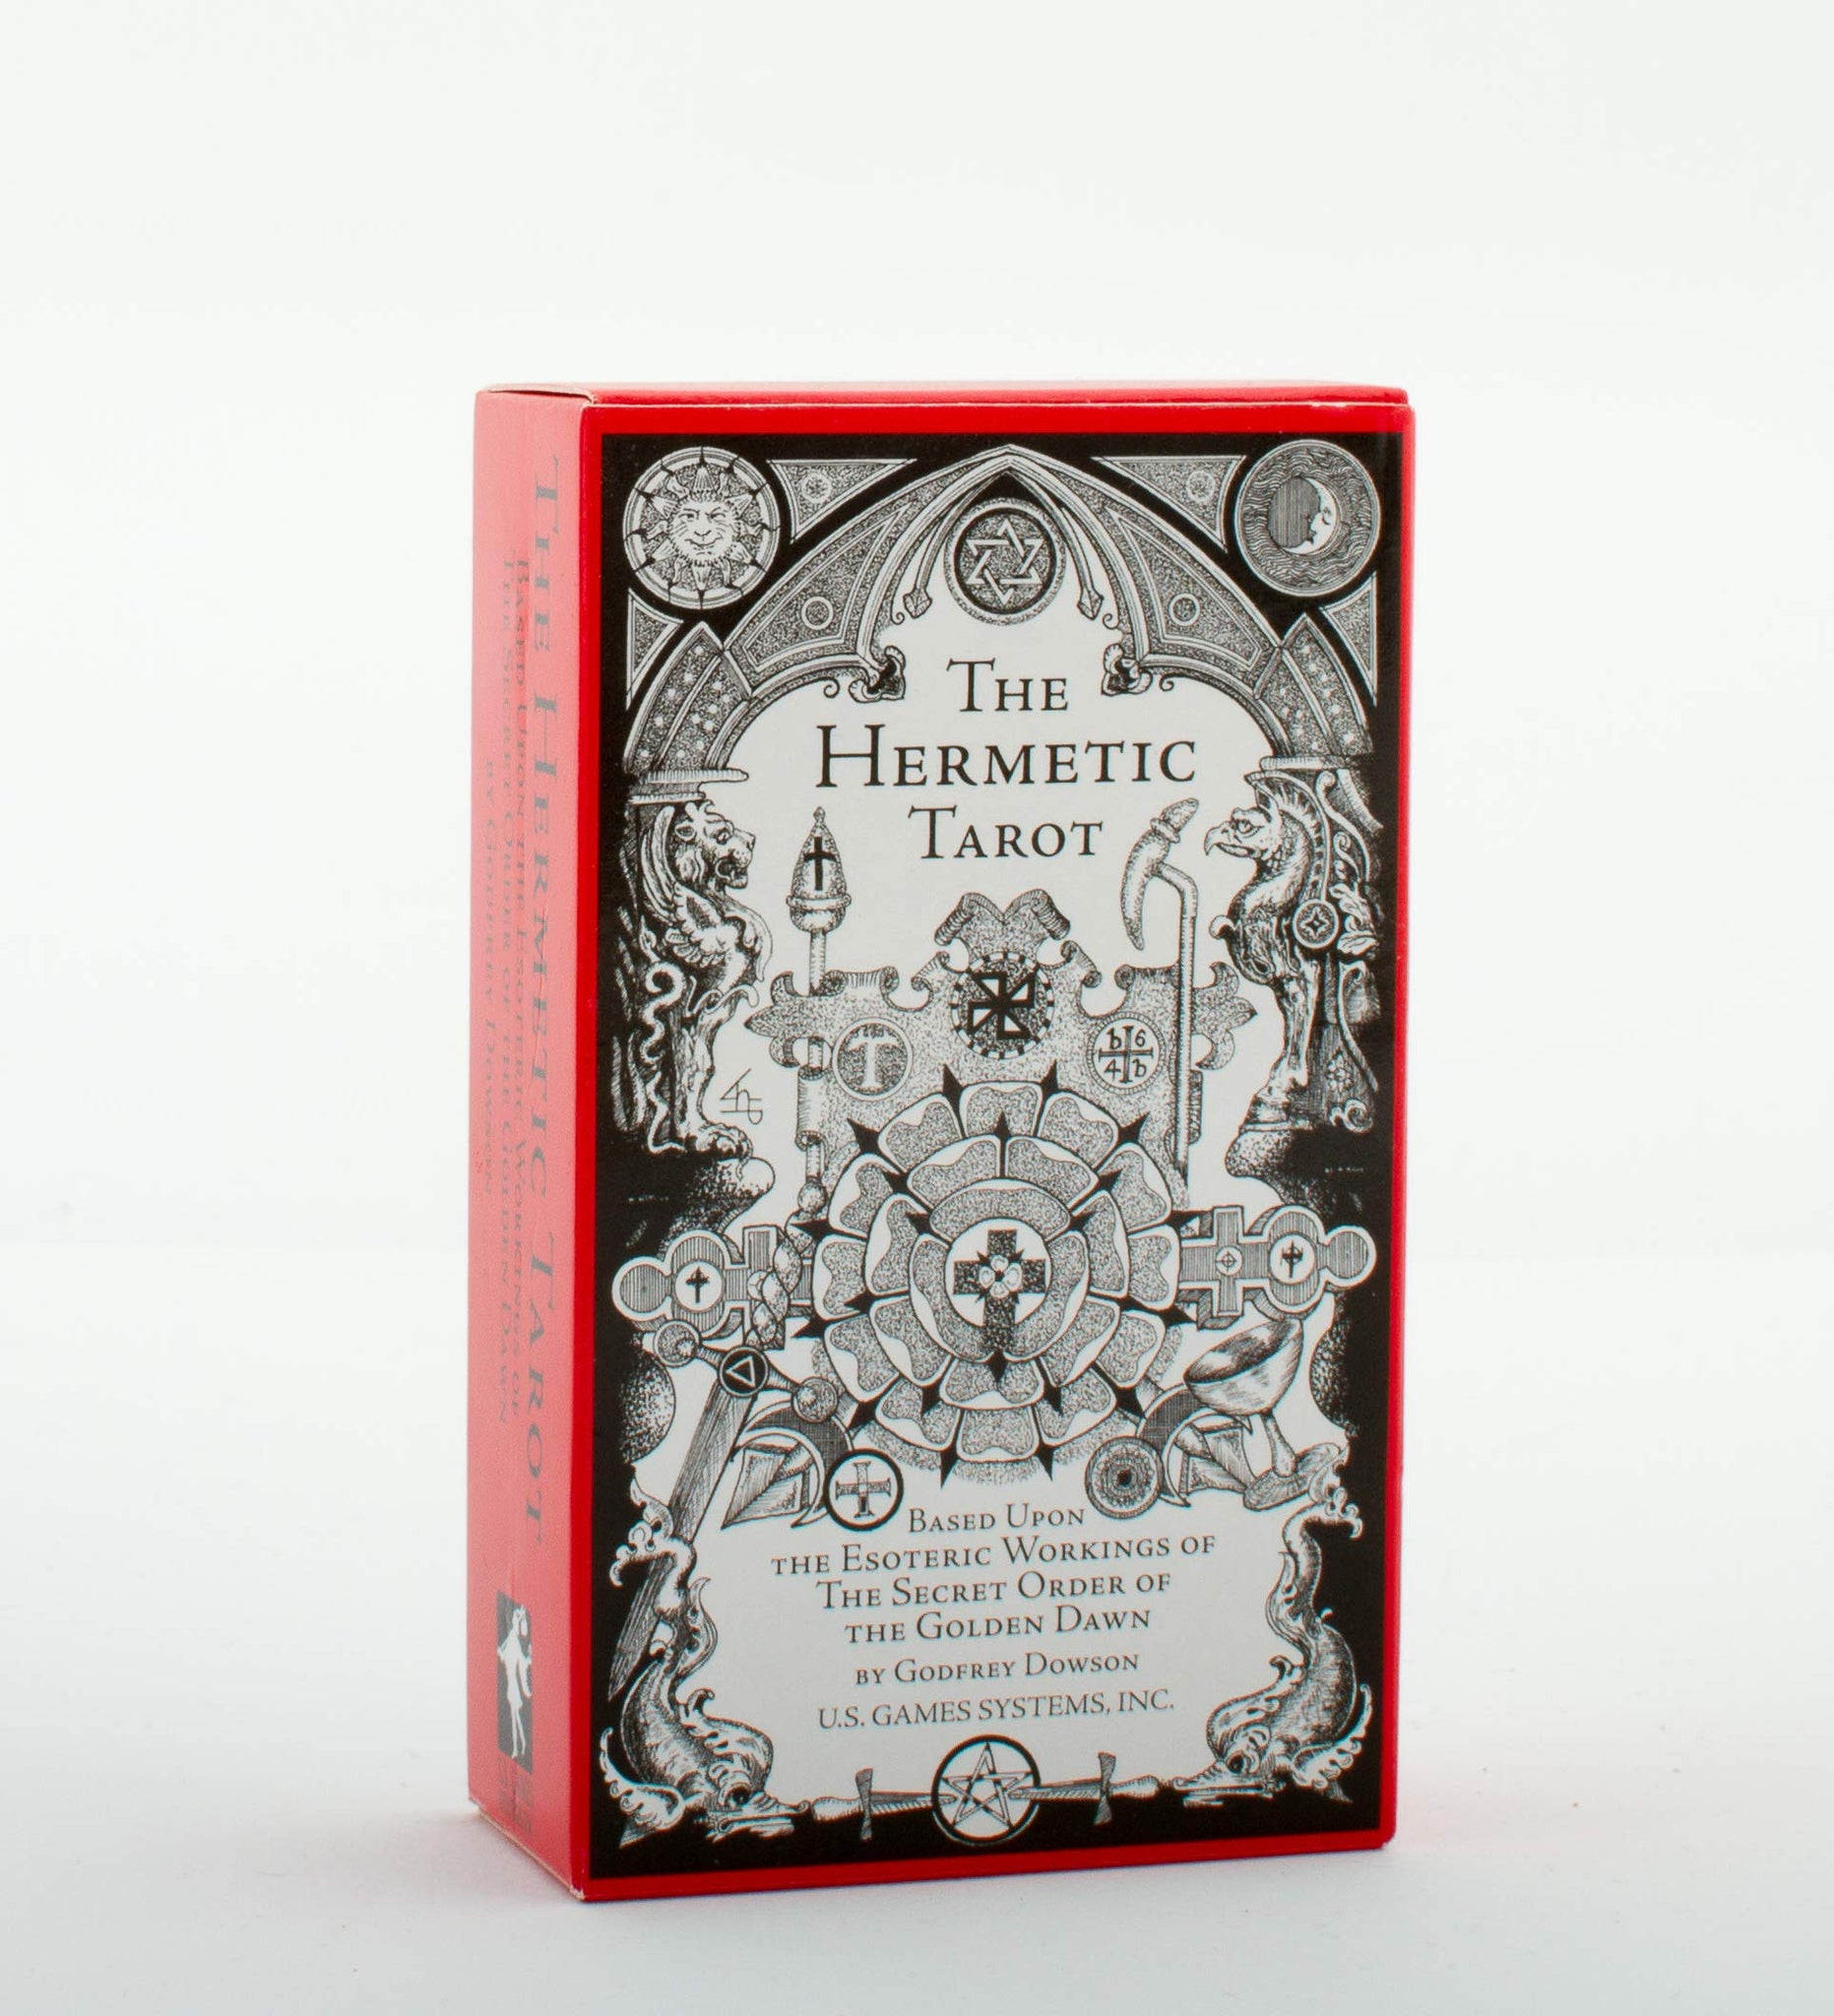 The Hermetic Tarot by Godfrey Dowson